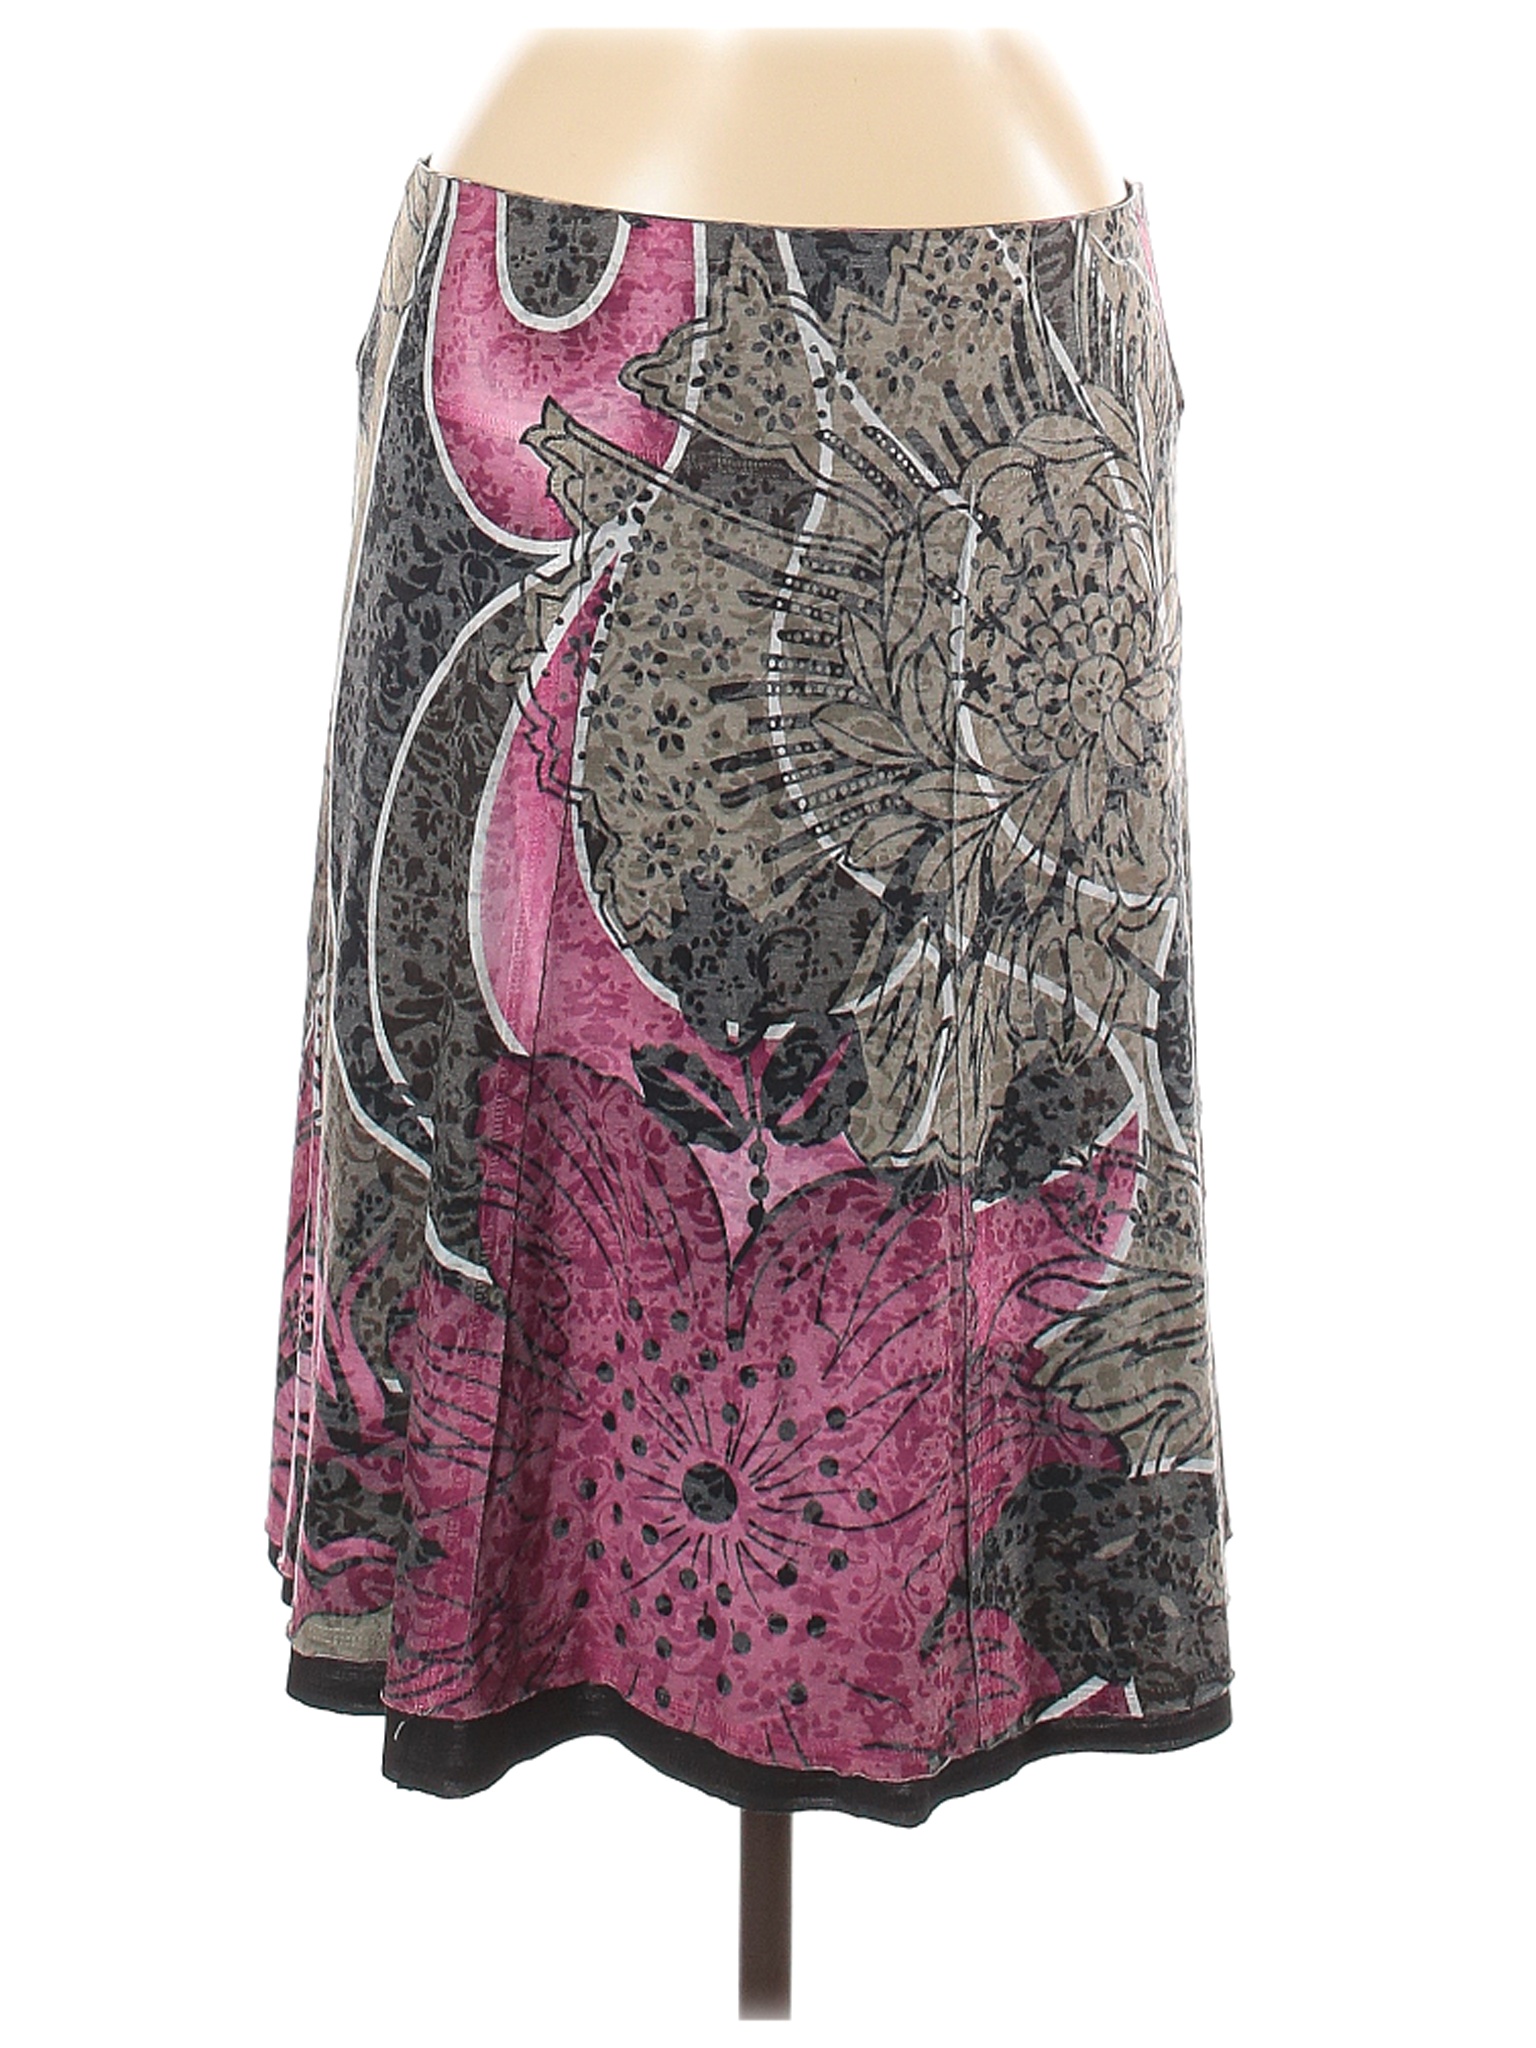 For Cynthia Women Gray Casual Skirt M | eBay